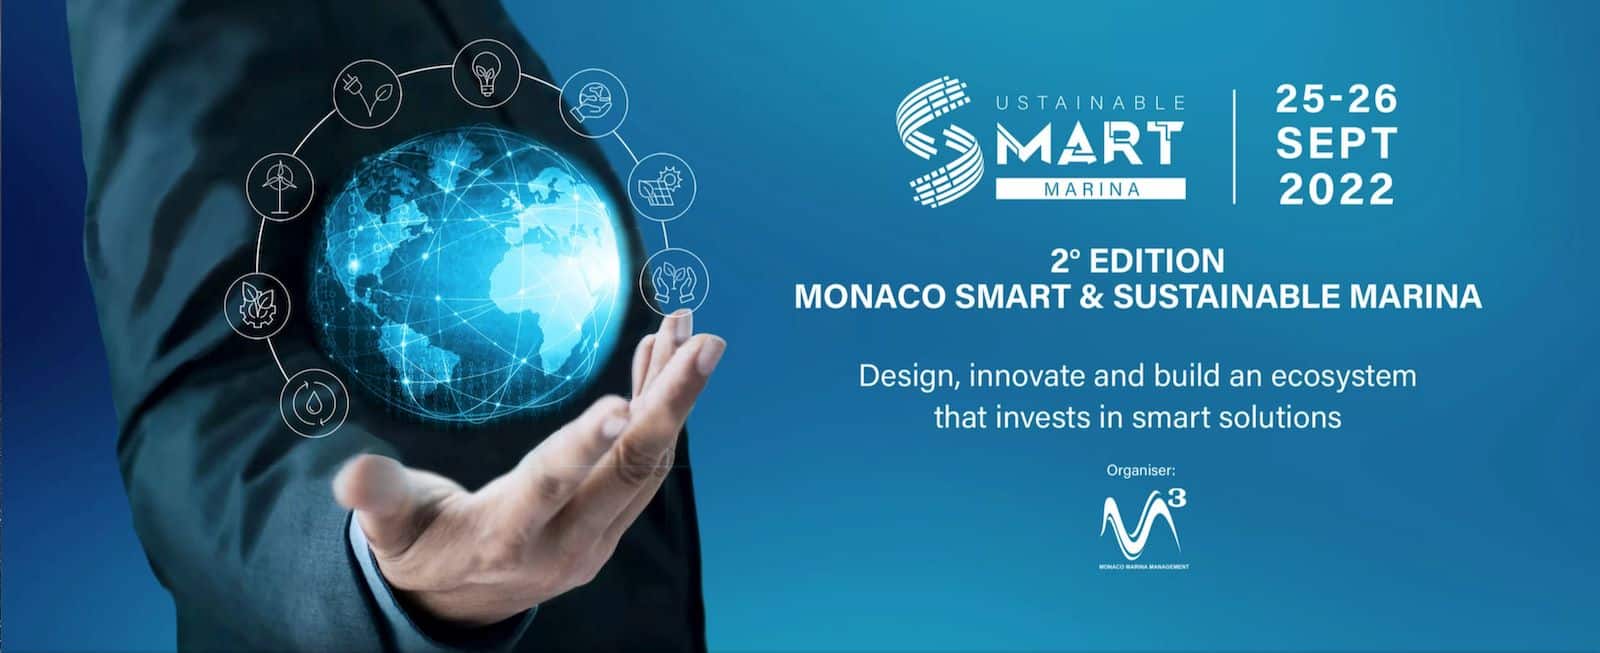 Monaco-Smart-Sustainable-Marina